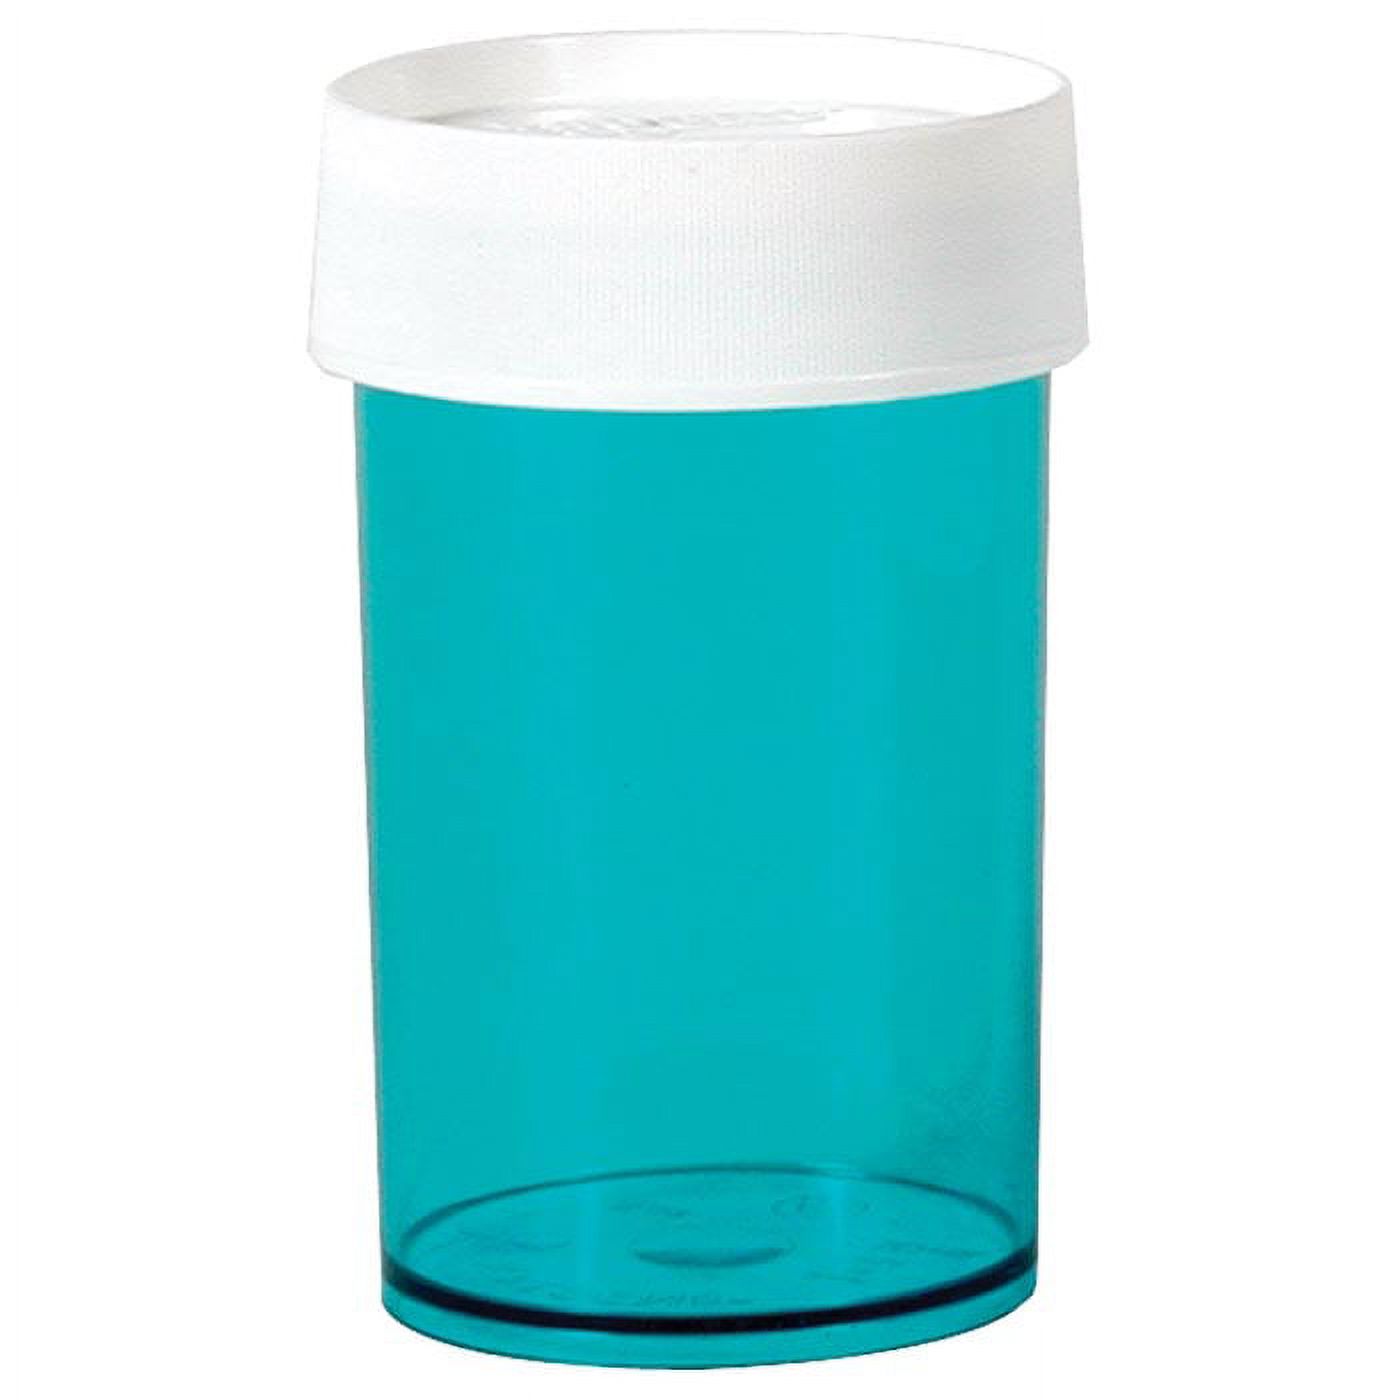 Nalgene Polypropylene Wide Mouth Storage Jar - 4 oz. - Clear - image 3 of 7